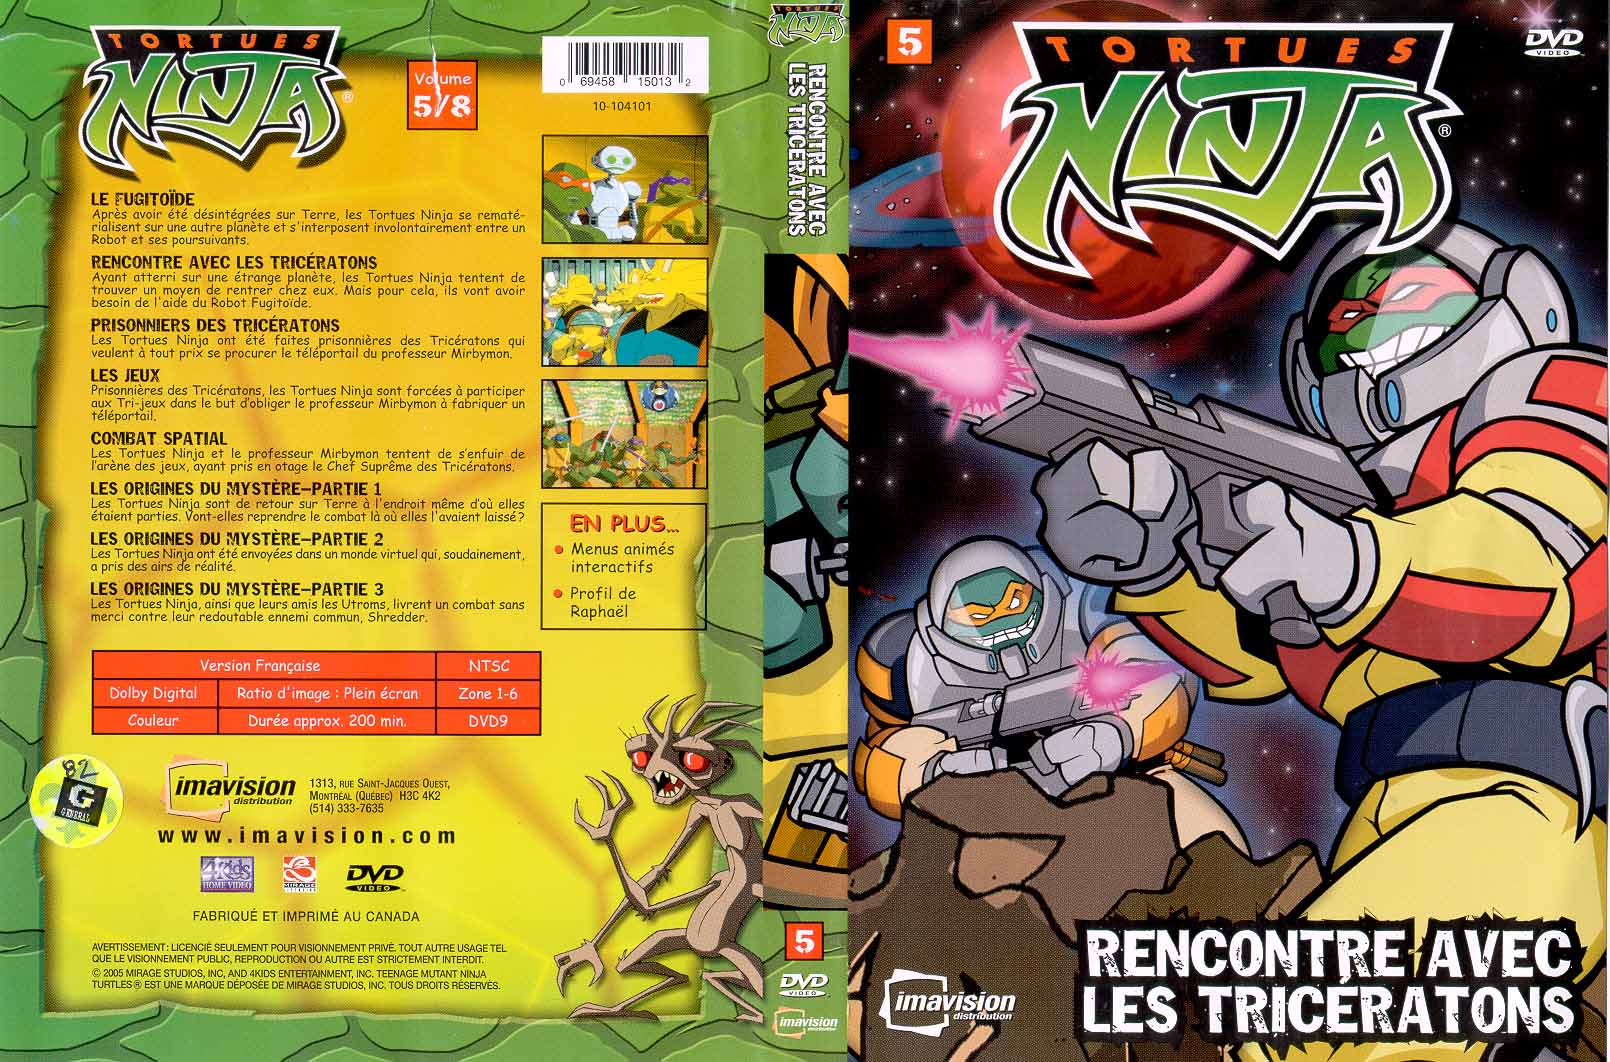 Jaquette DVD Tortues Ninja vol 5